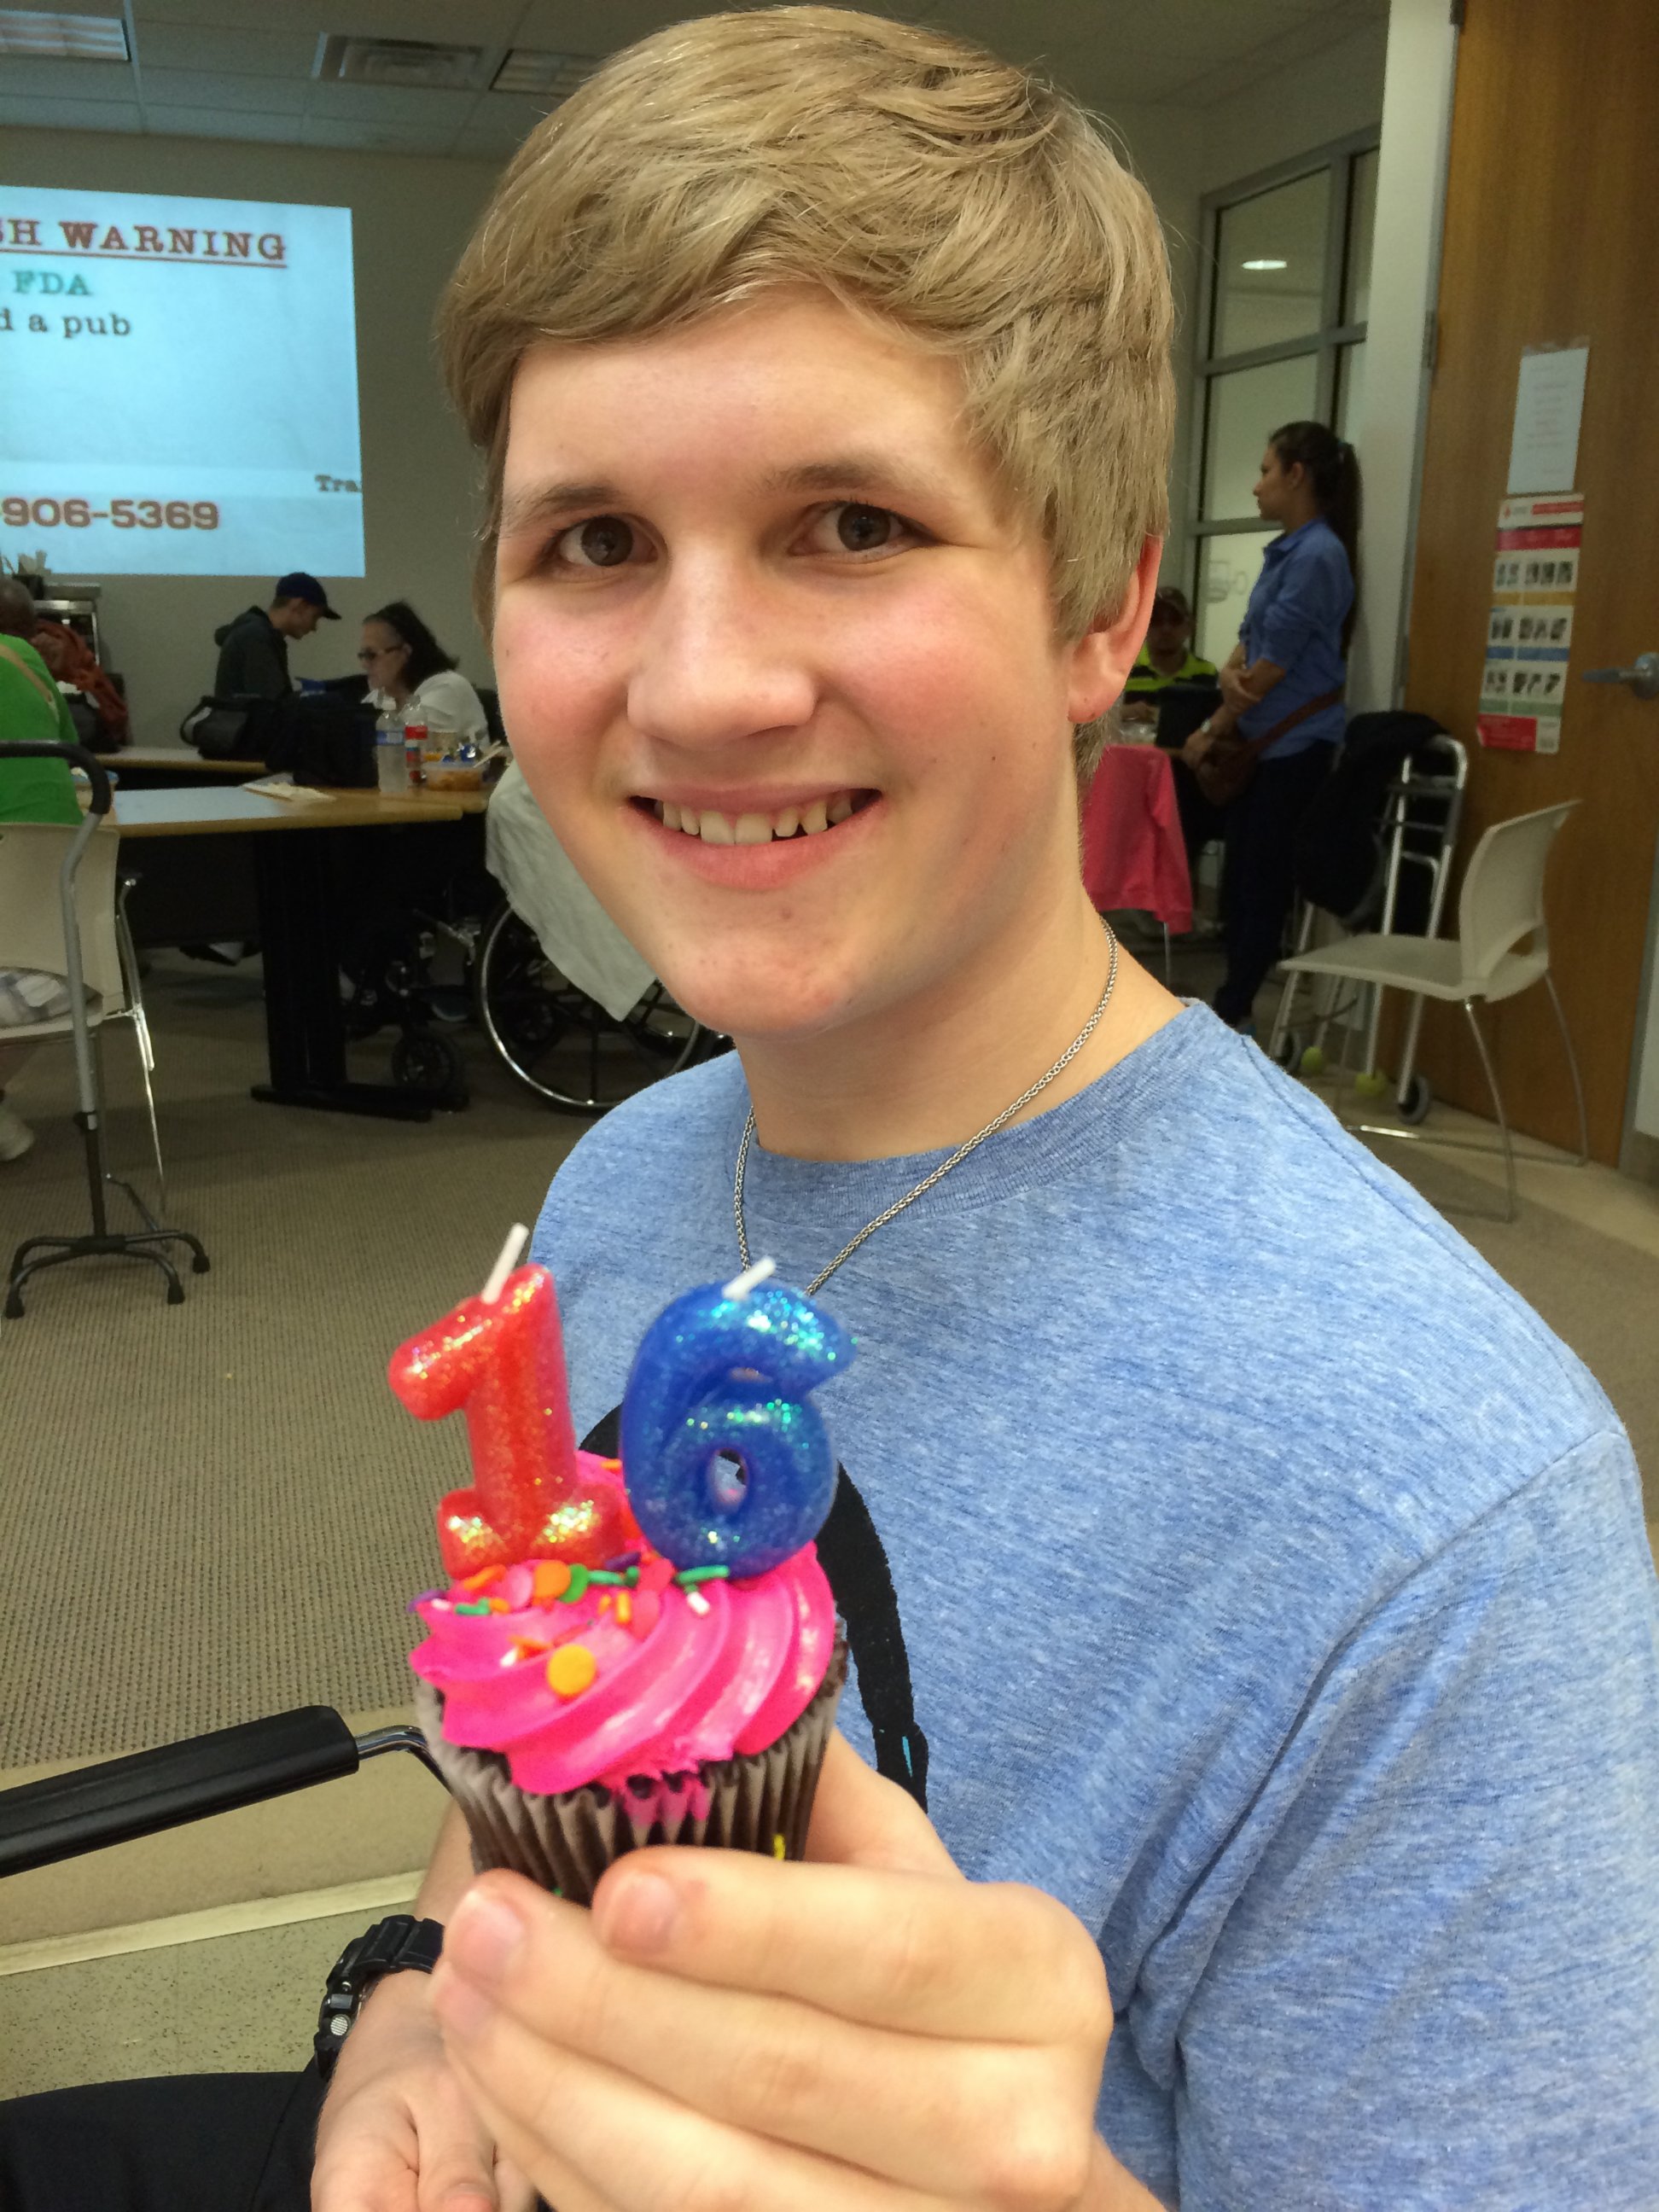 PHOTO: Blake Hyland celebrates his sixteenth birthday.